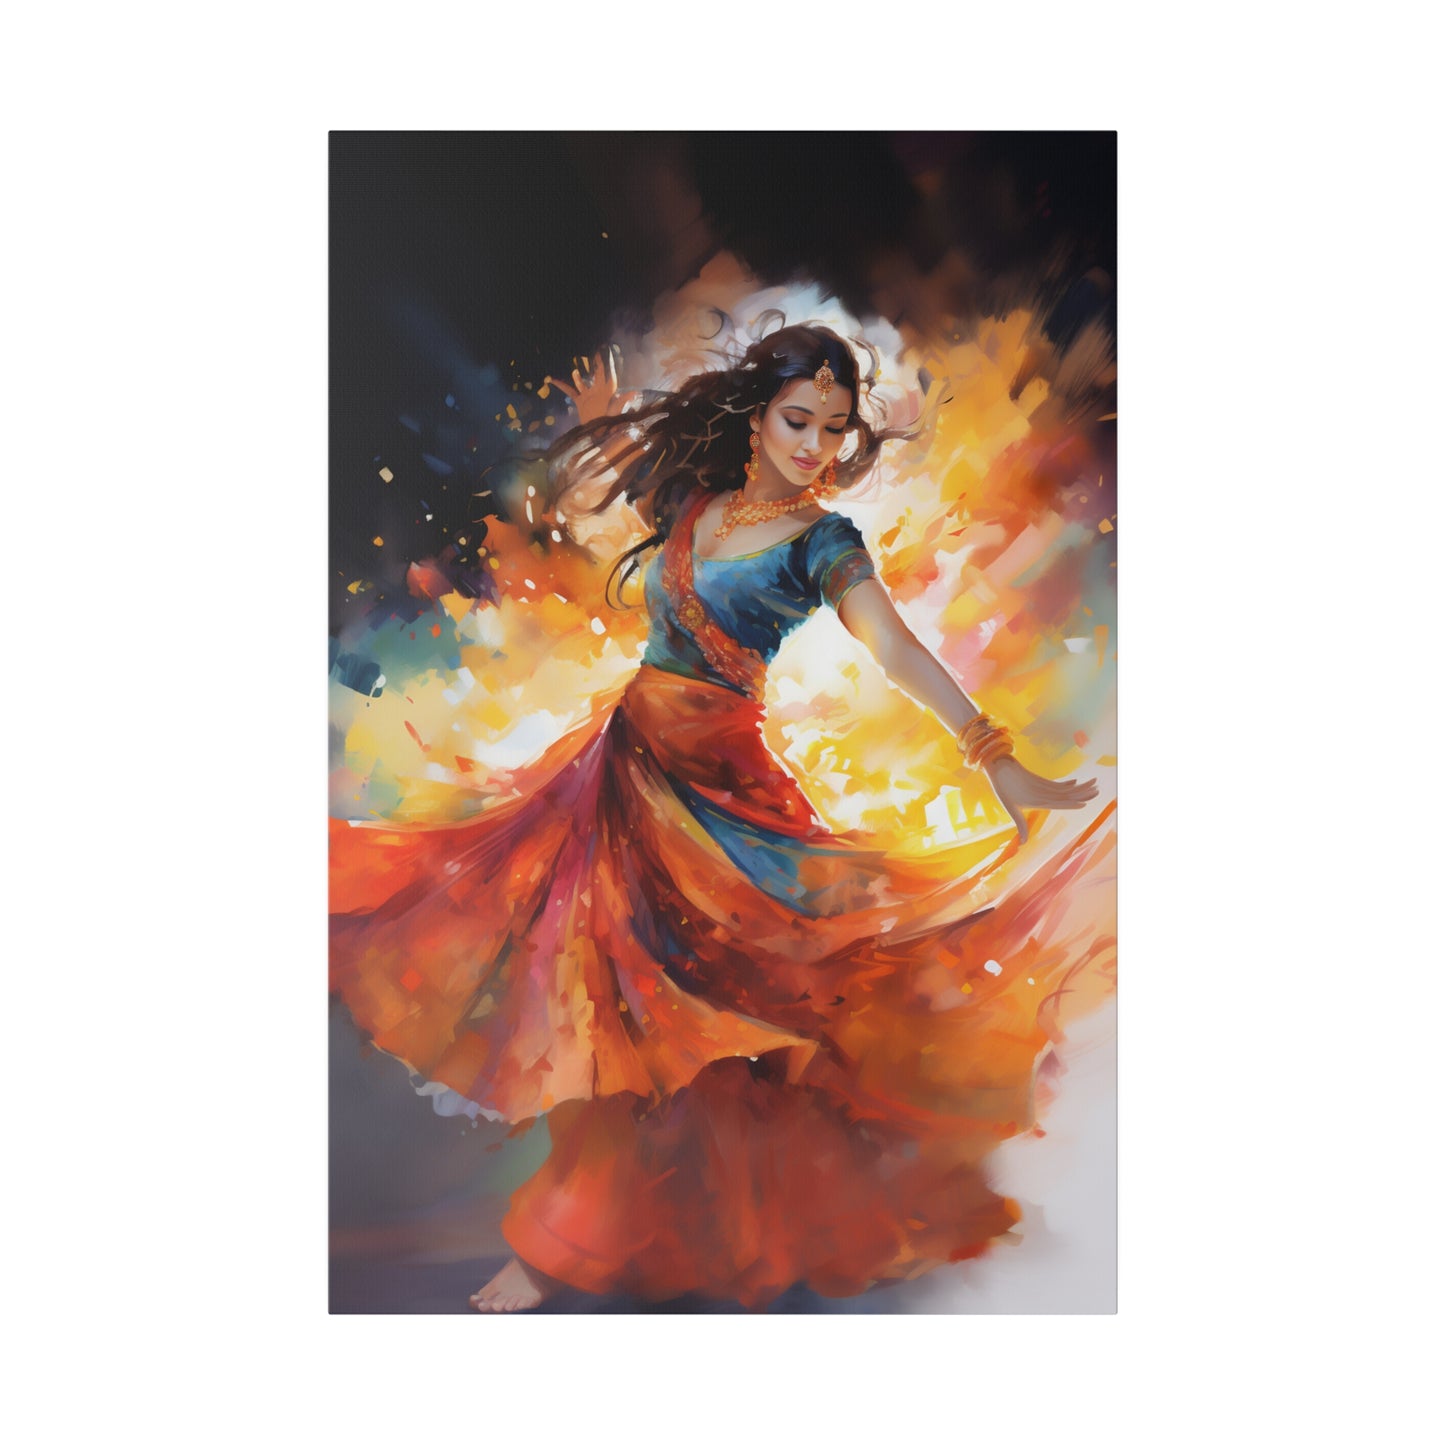 Rhythms of Grace: An Indian Dance in Watercolor